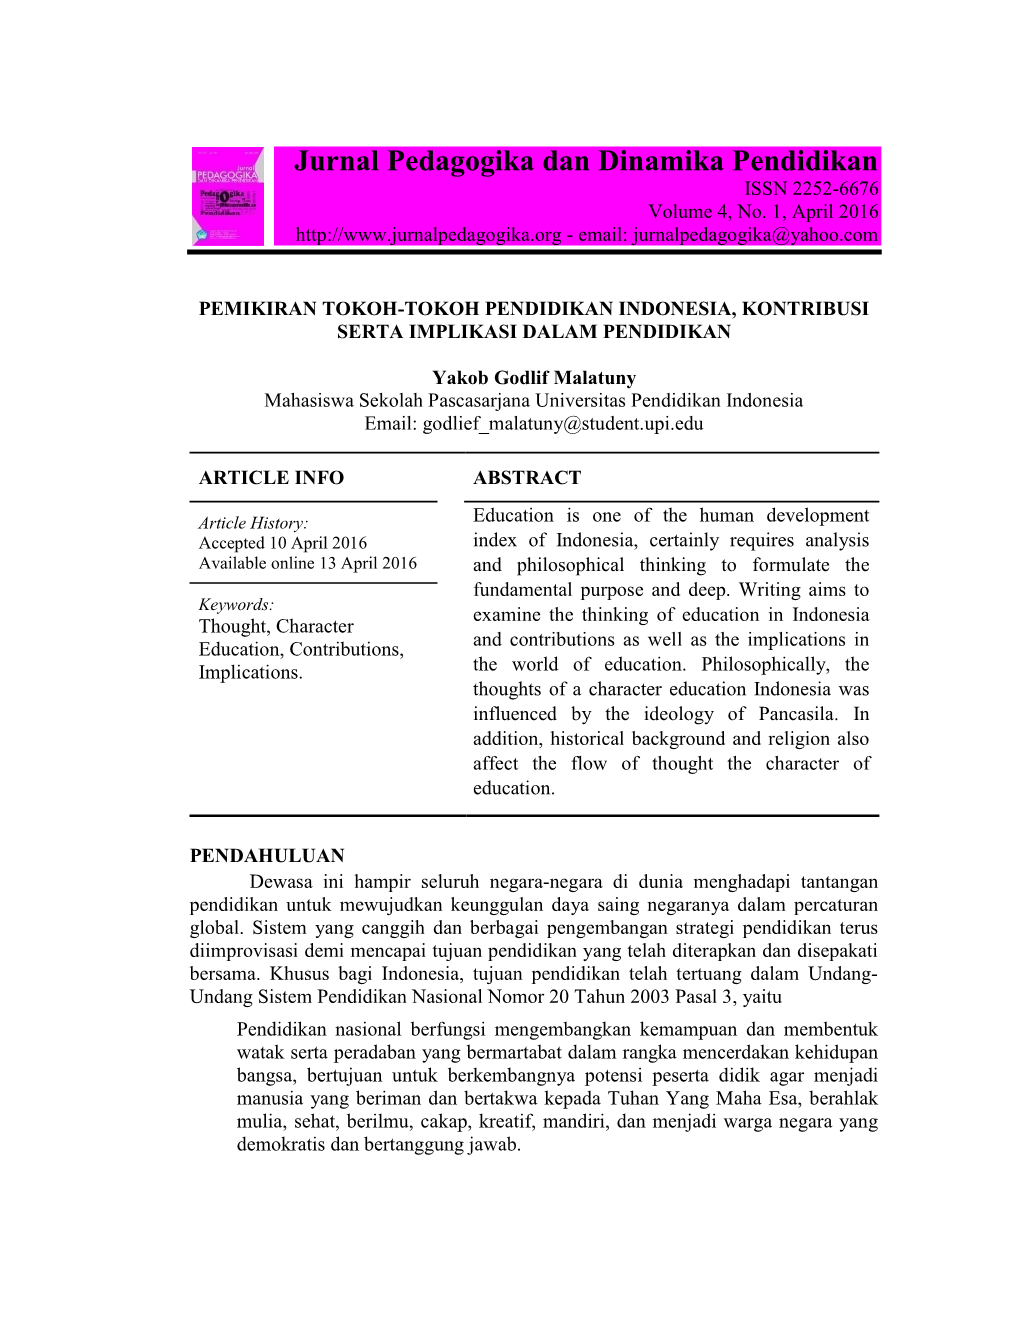 Jurnal Pedagogika Dan Dinamika Pendidikan ISSN 2252-6676 Volume 4, No